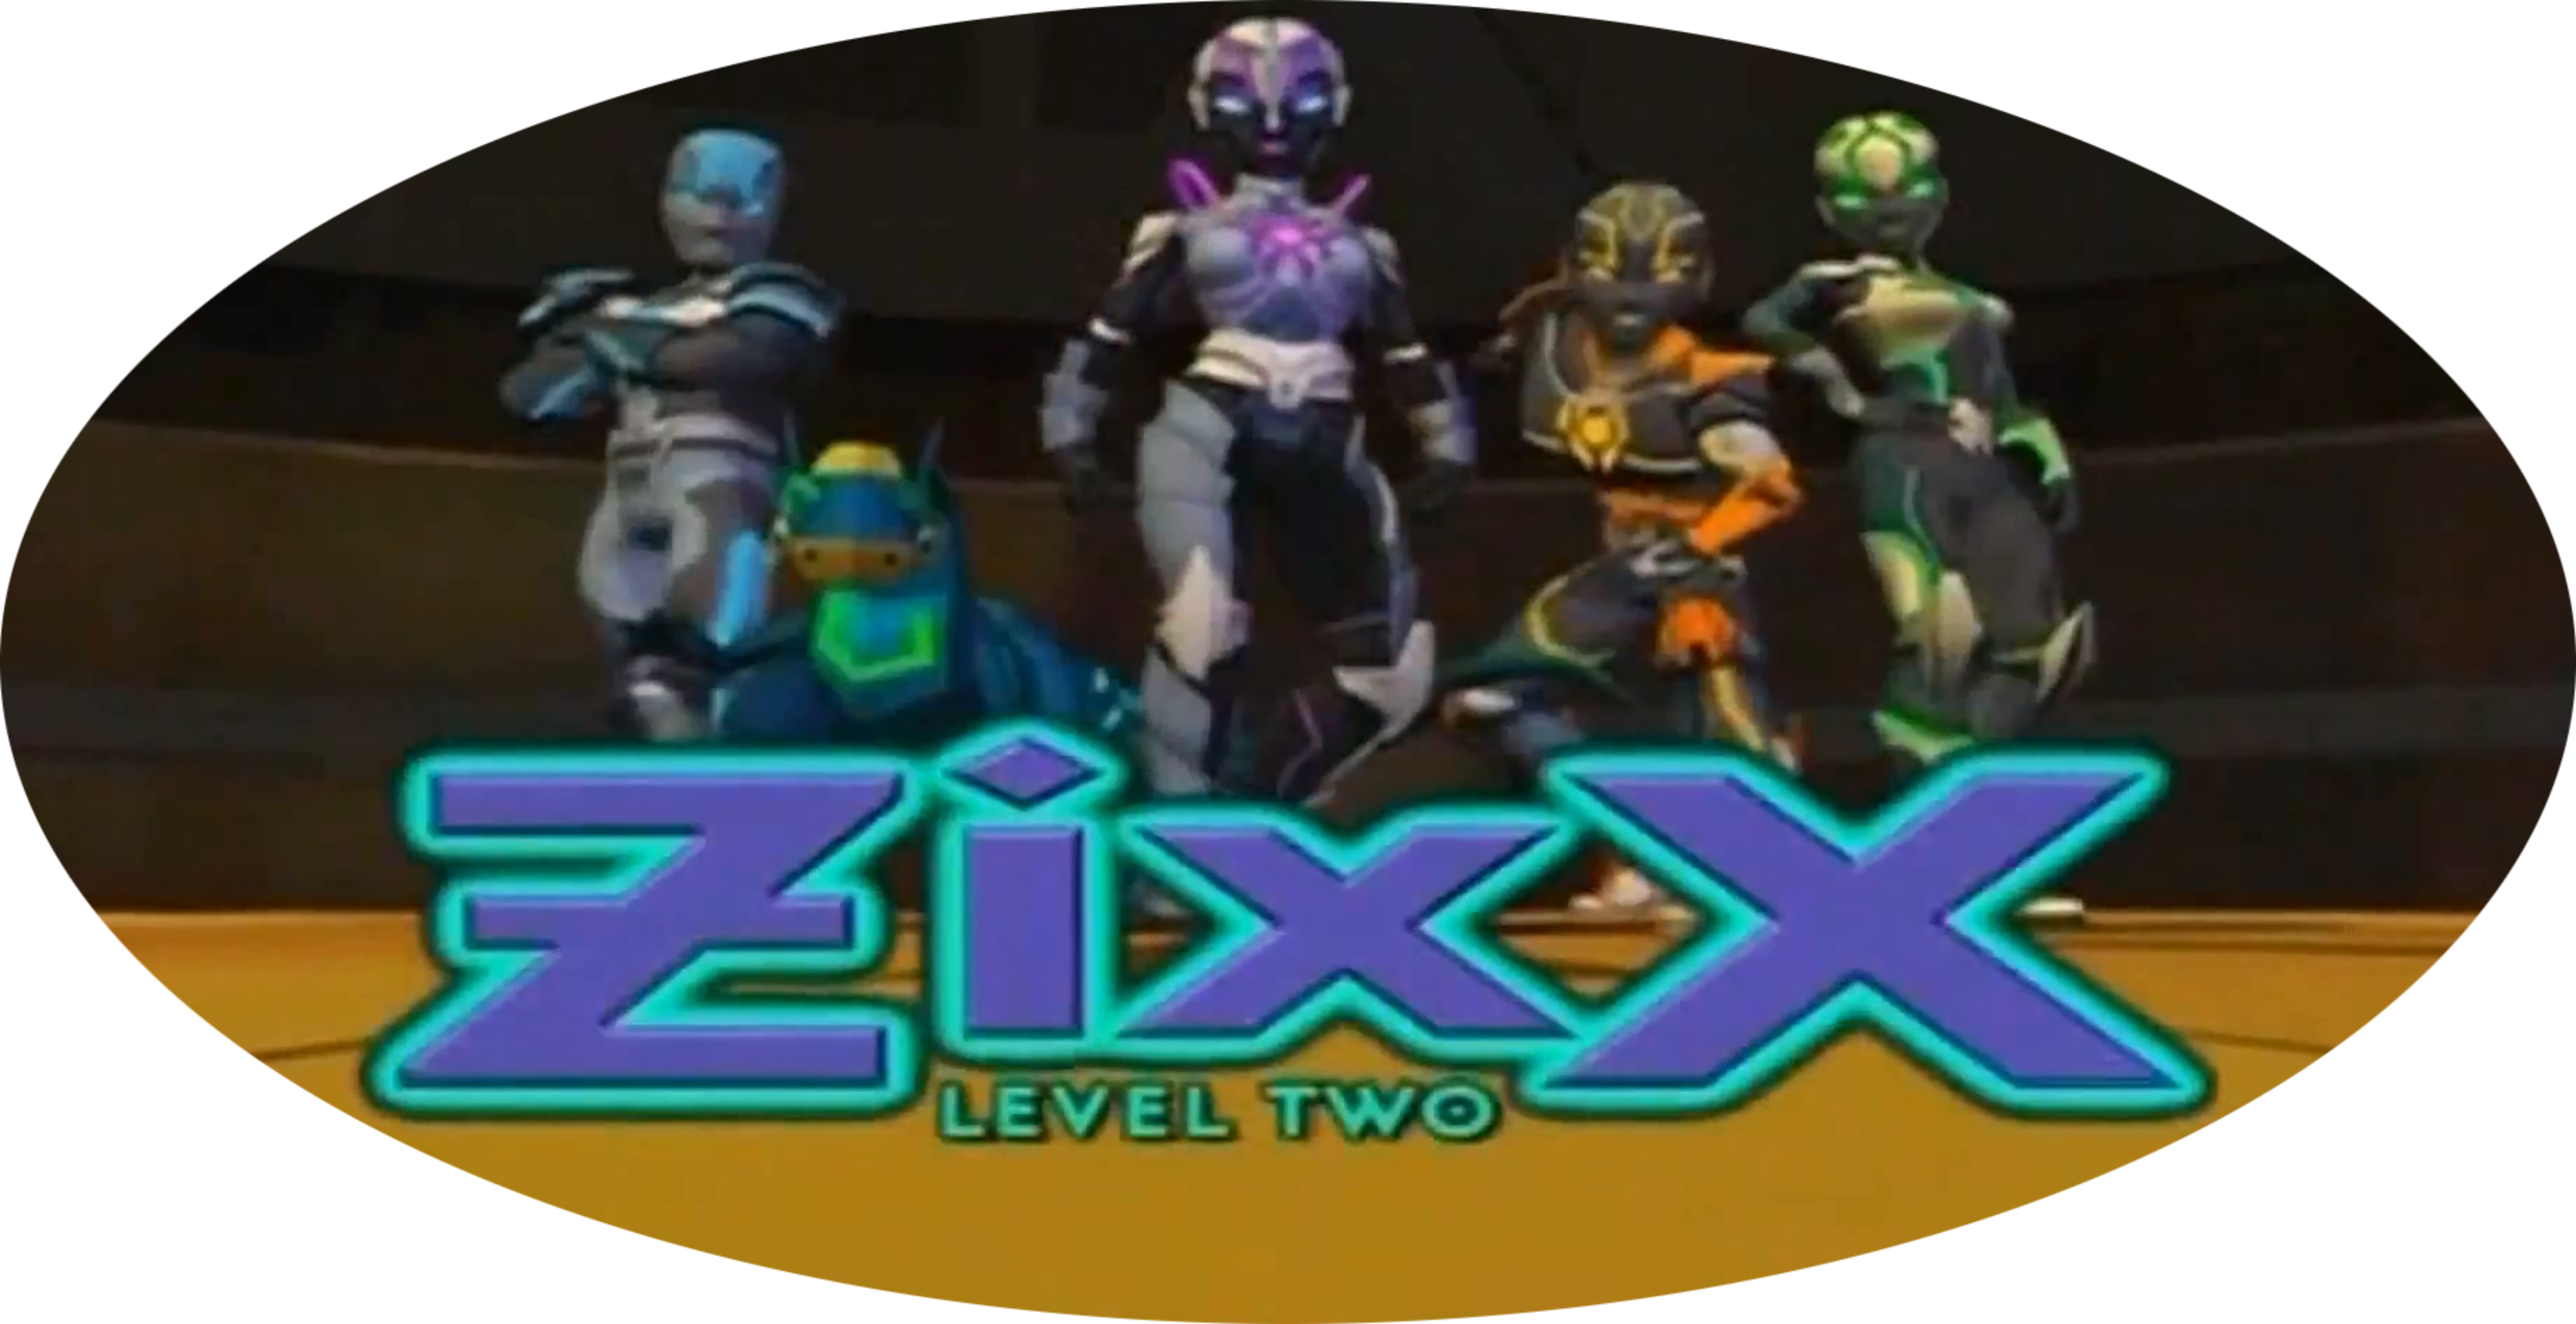 Zixx Level Two 